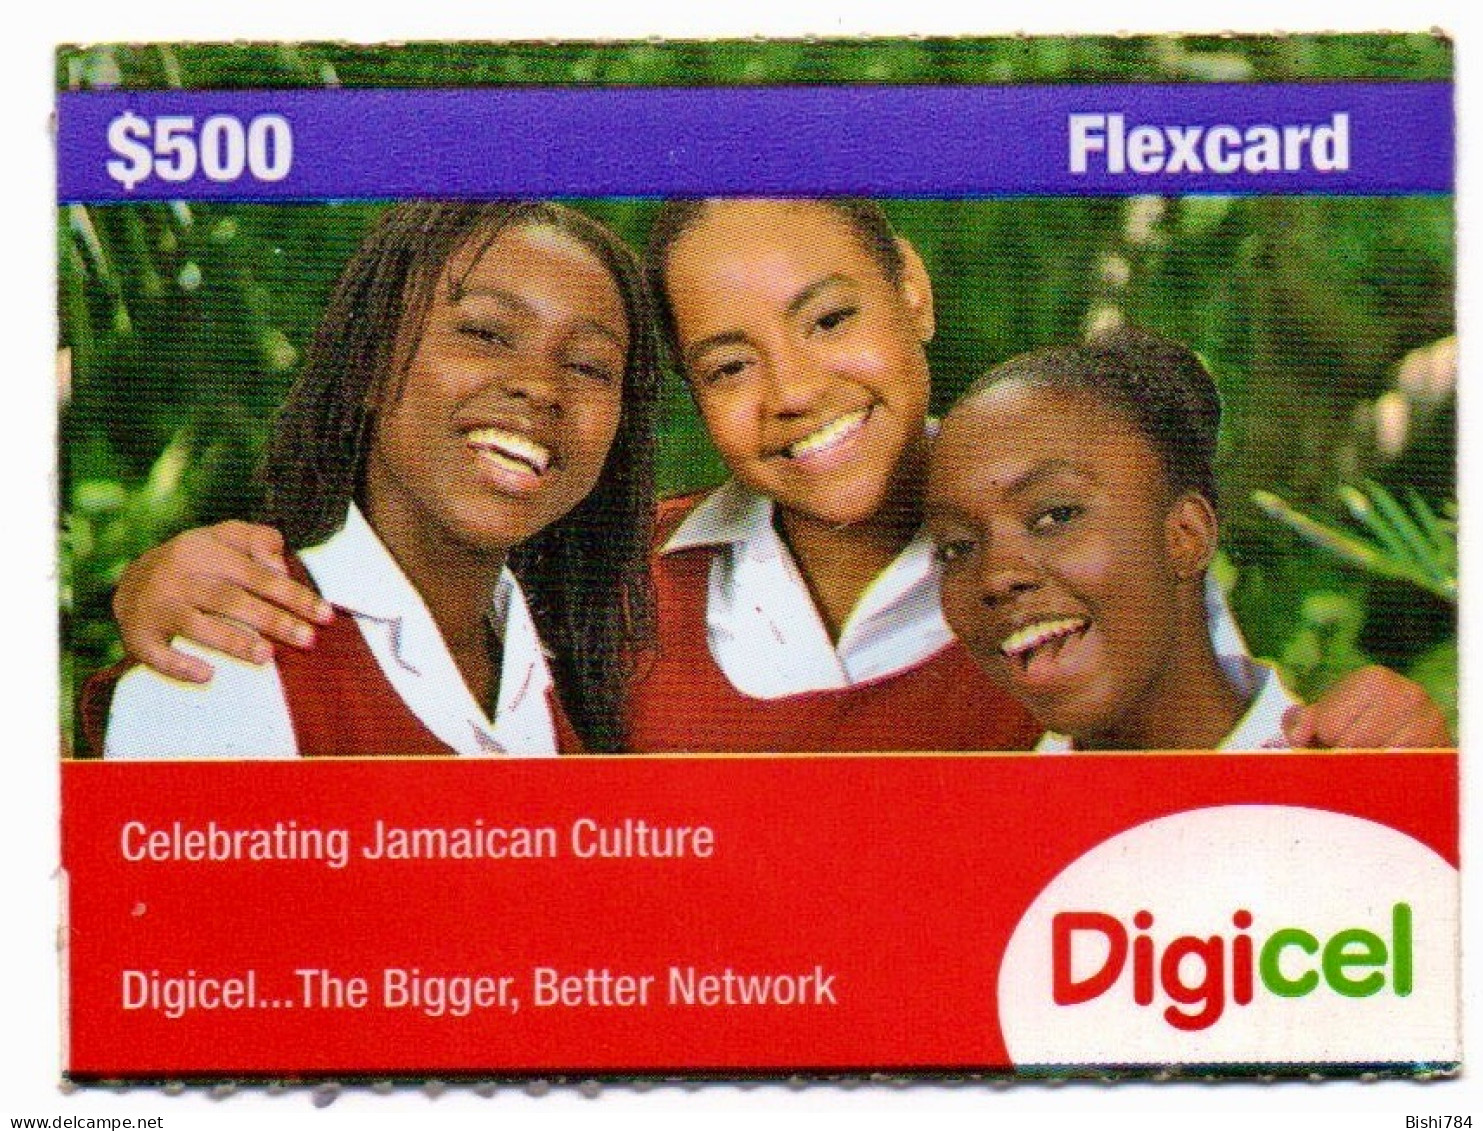 Jamaica - Celebrating Jamaican Culture (Students) - 30/01/2013 - Jamaica